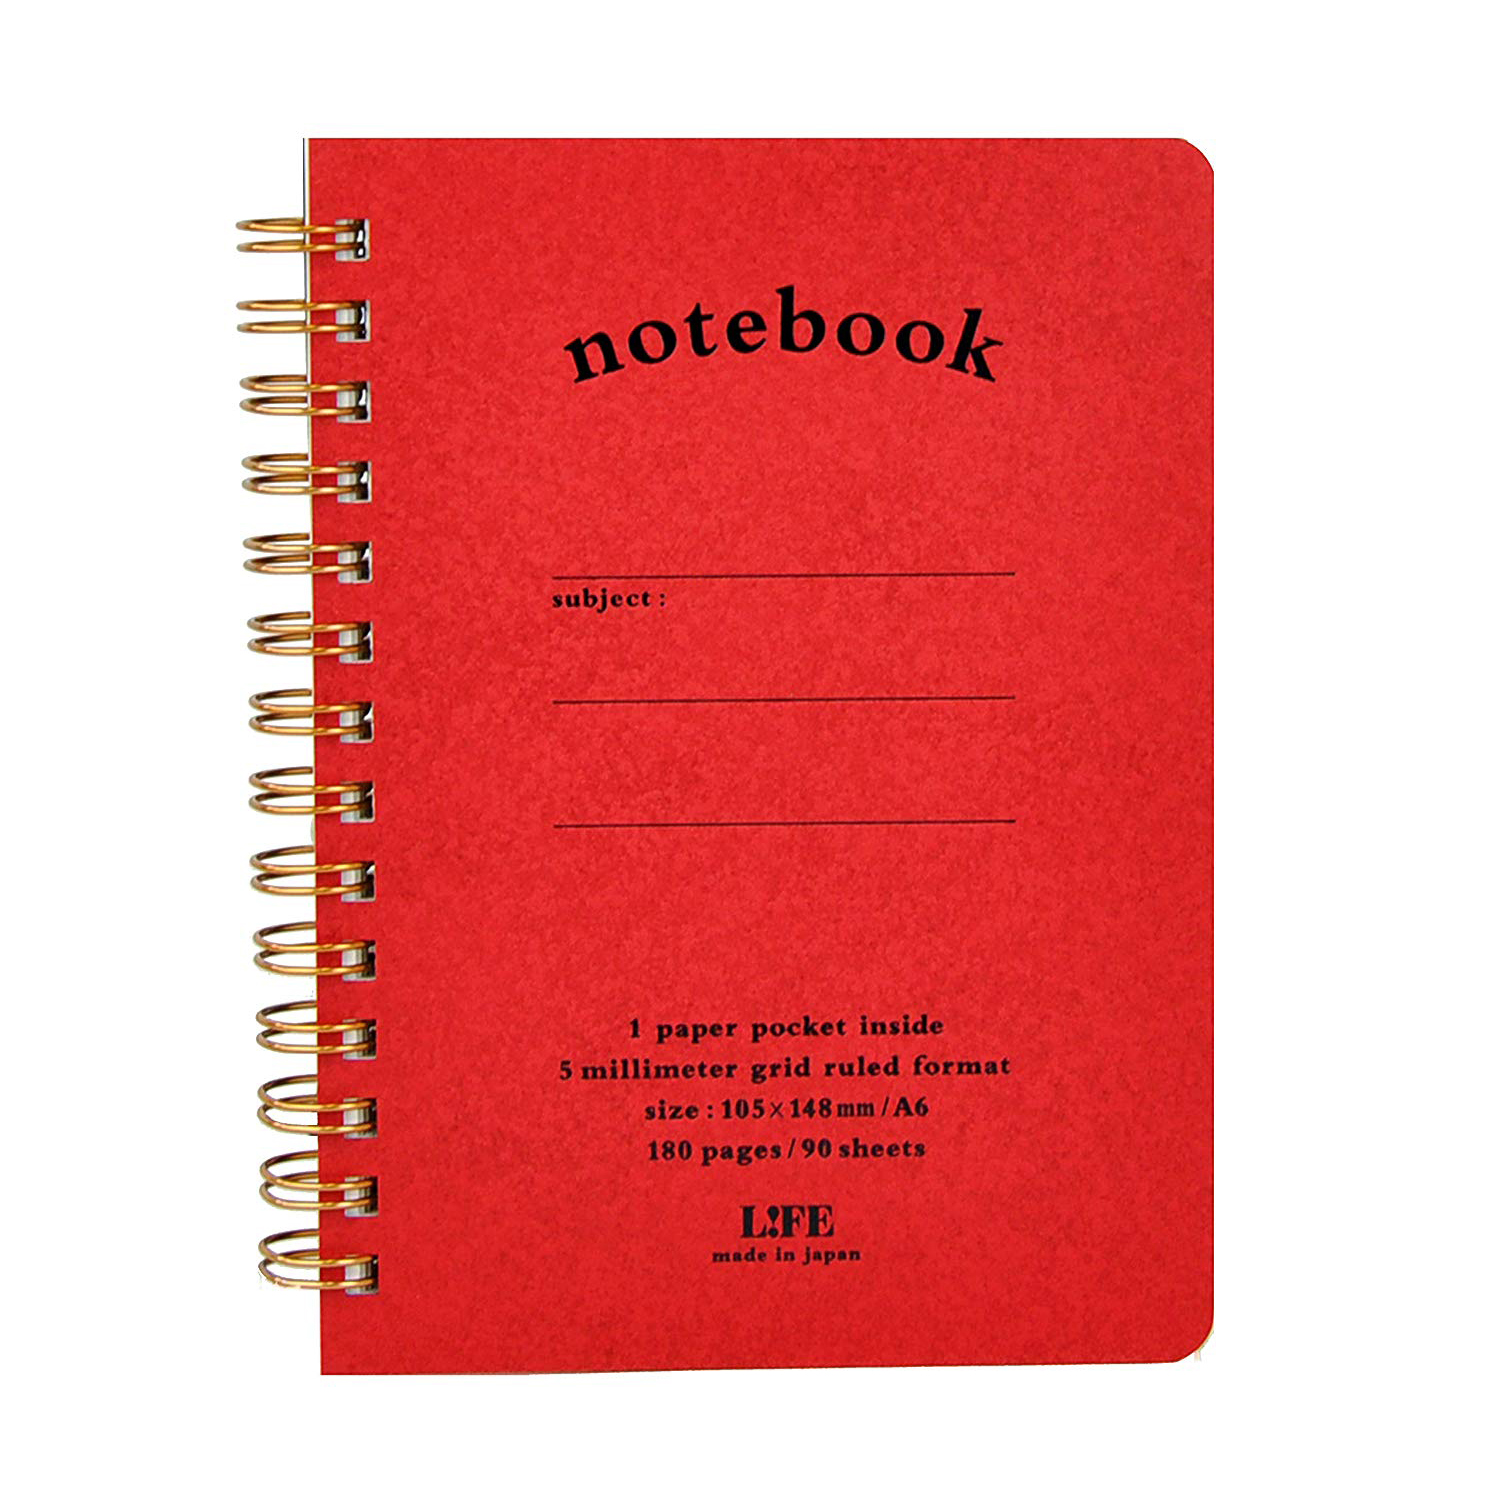 Life Pocket Notes Spiral Bound Notebooks